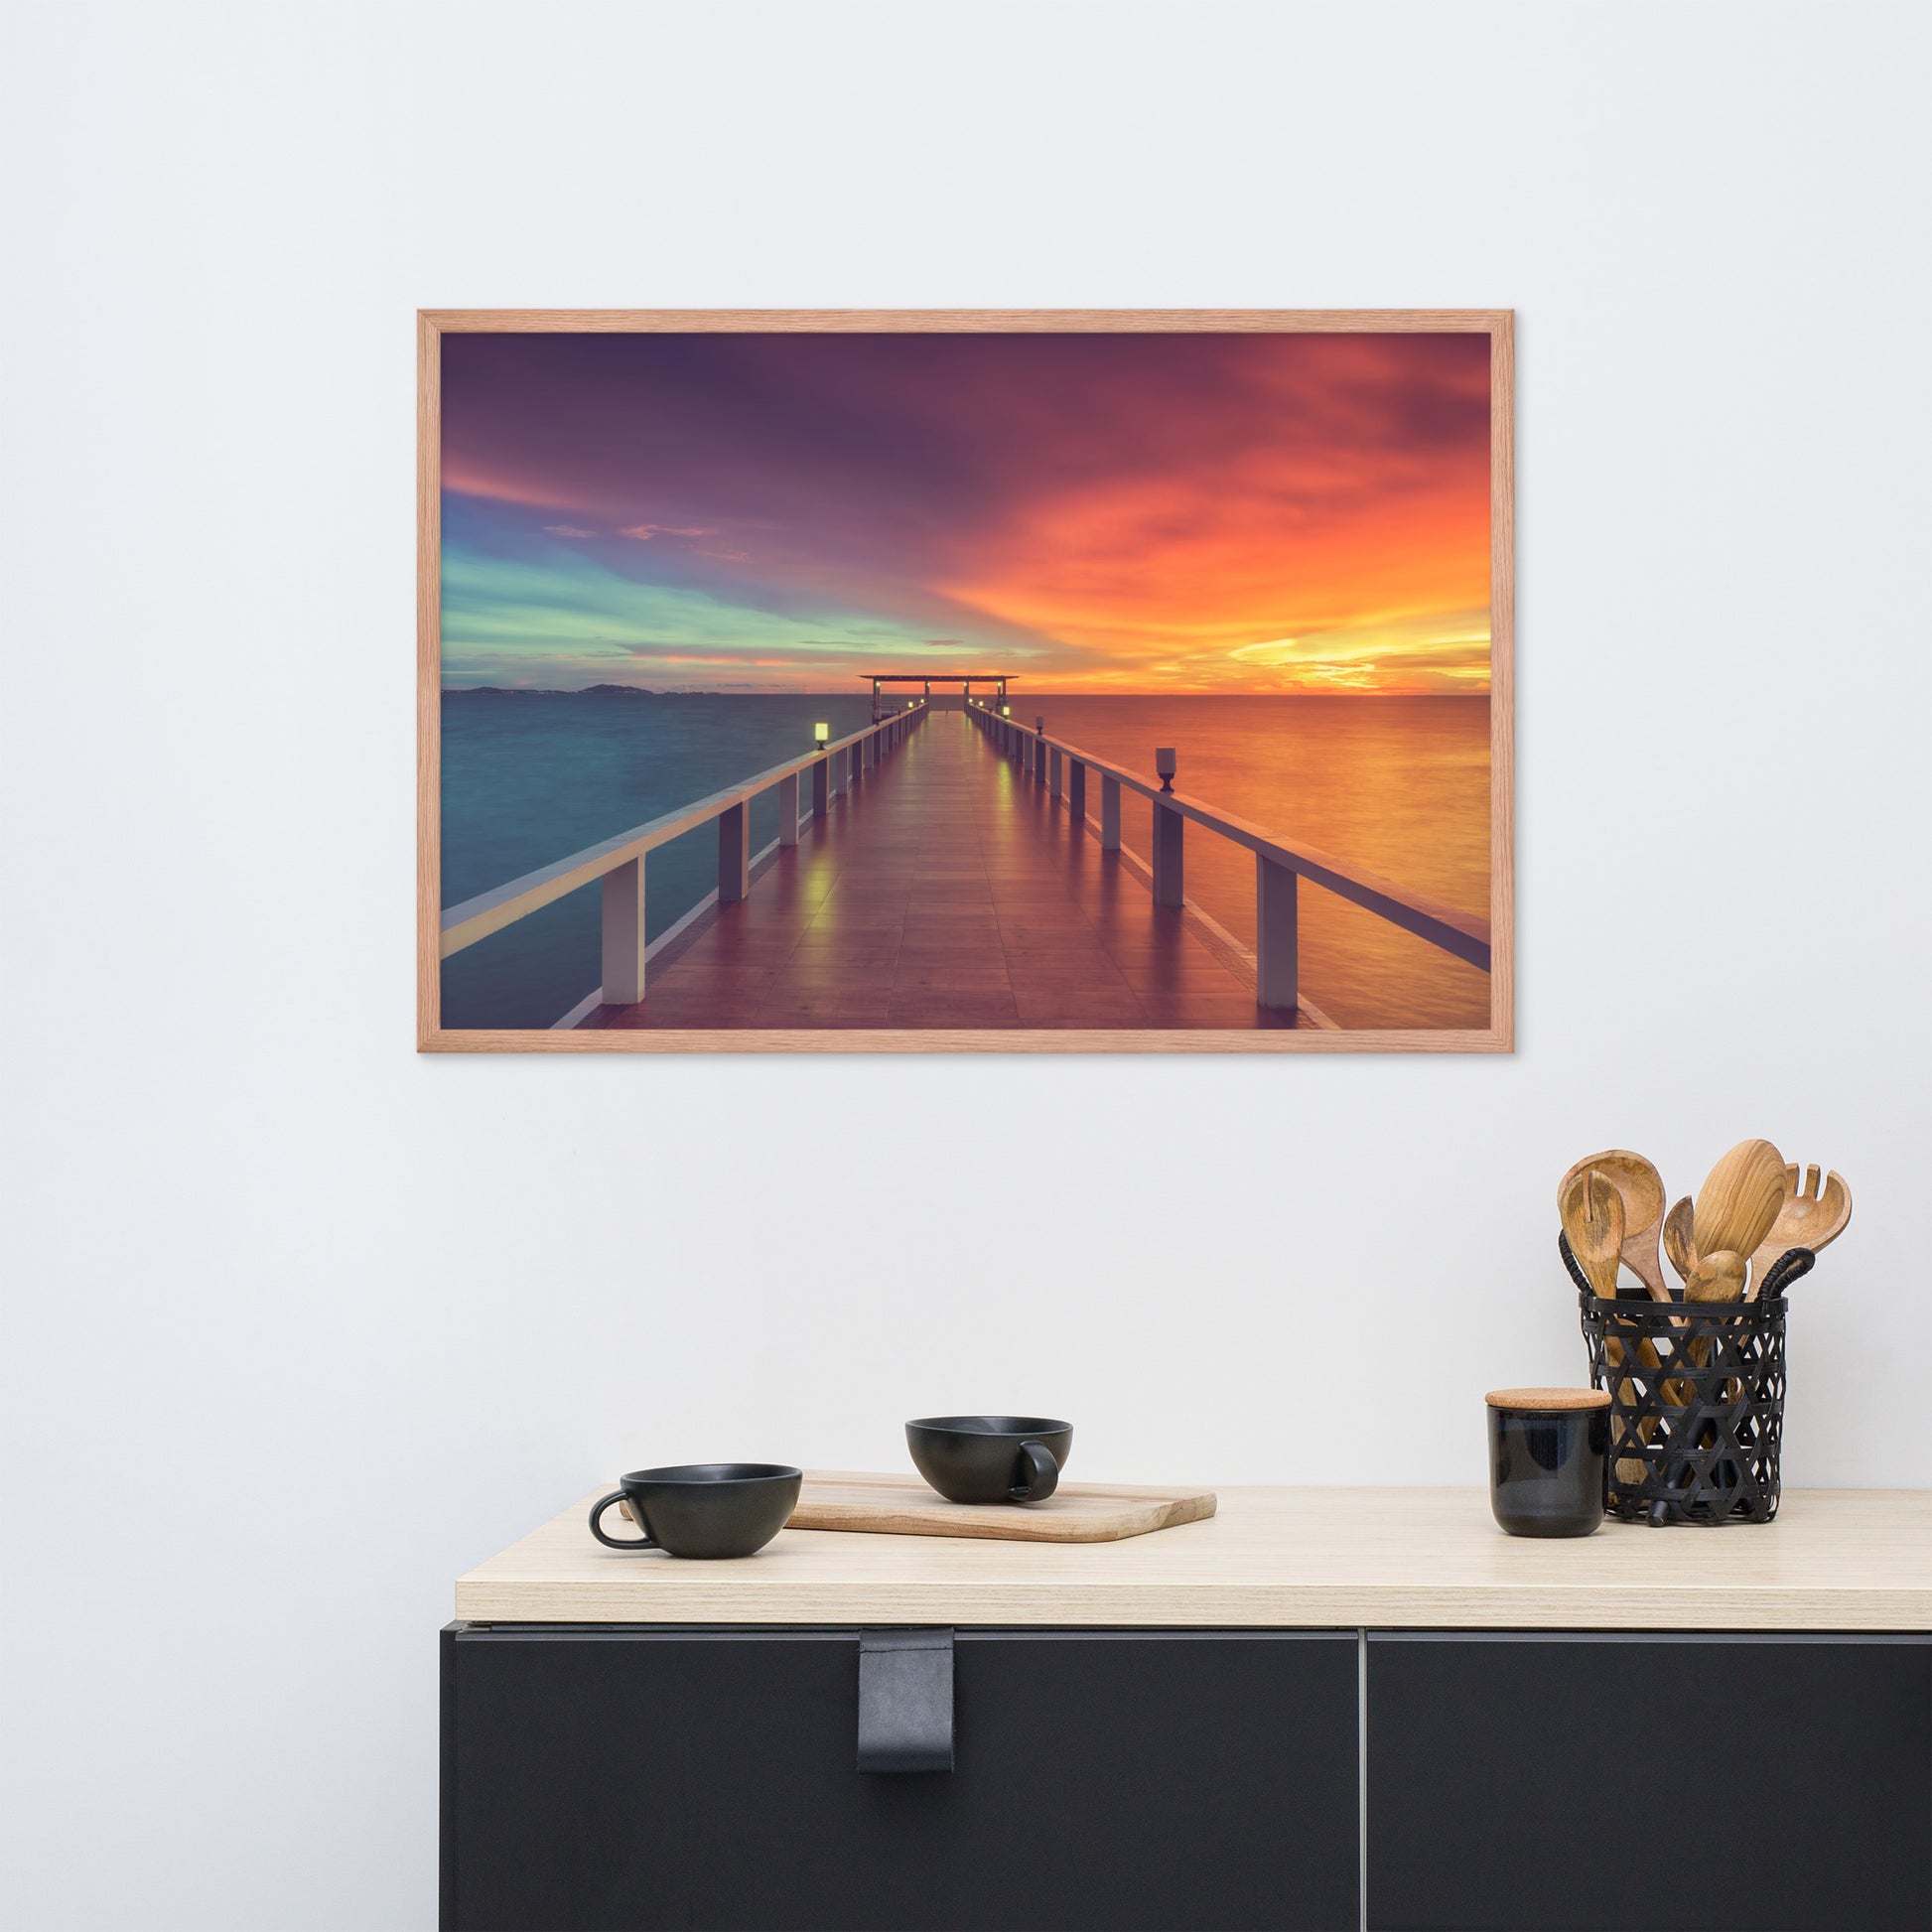 Coastal Pictures Framed: Surreal Wooden Pier At Sunset with Intrigued Effect - Coastal / Seascape / Nature / Landscape Photo Framed Artwork - Wall Decor